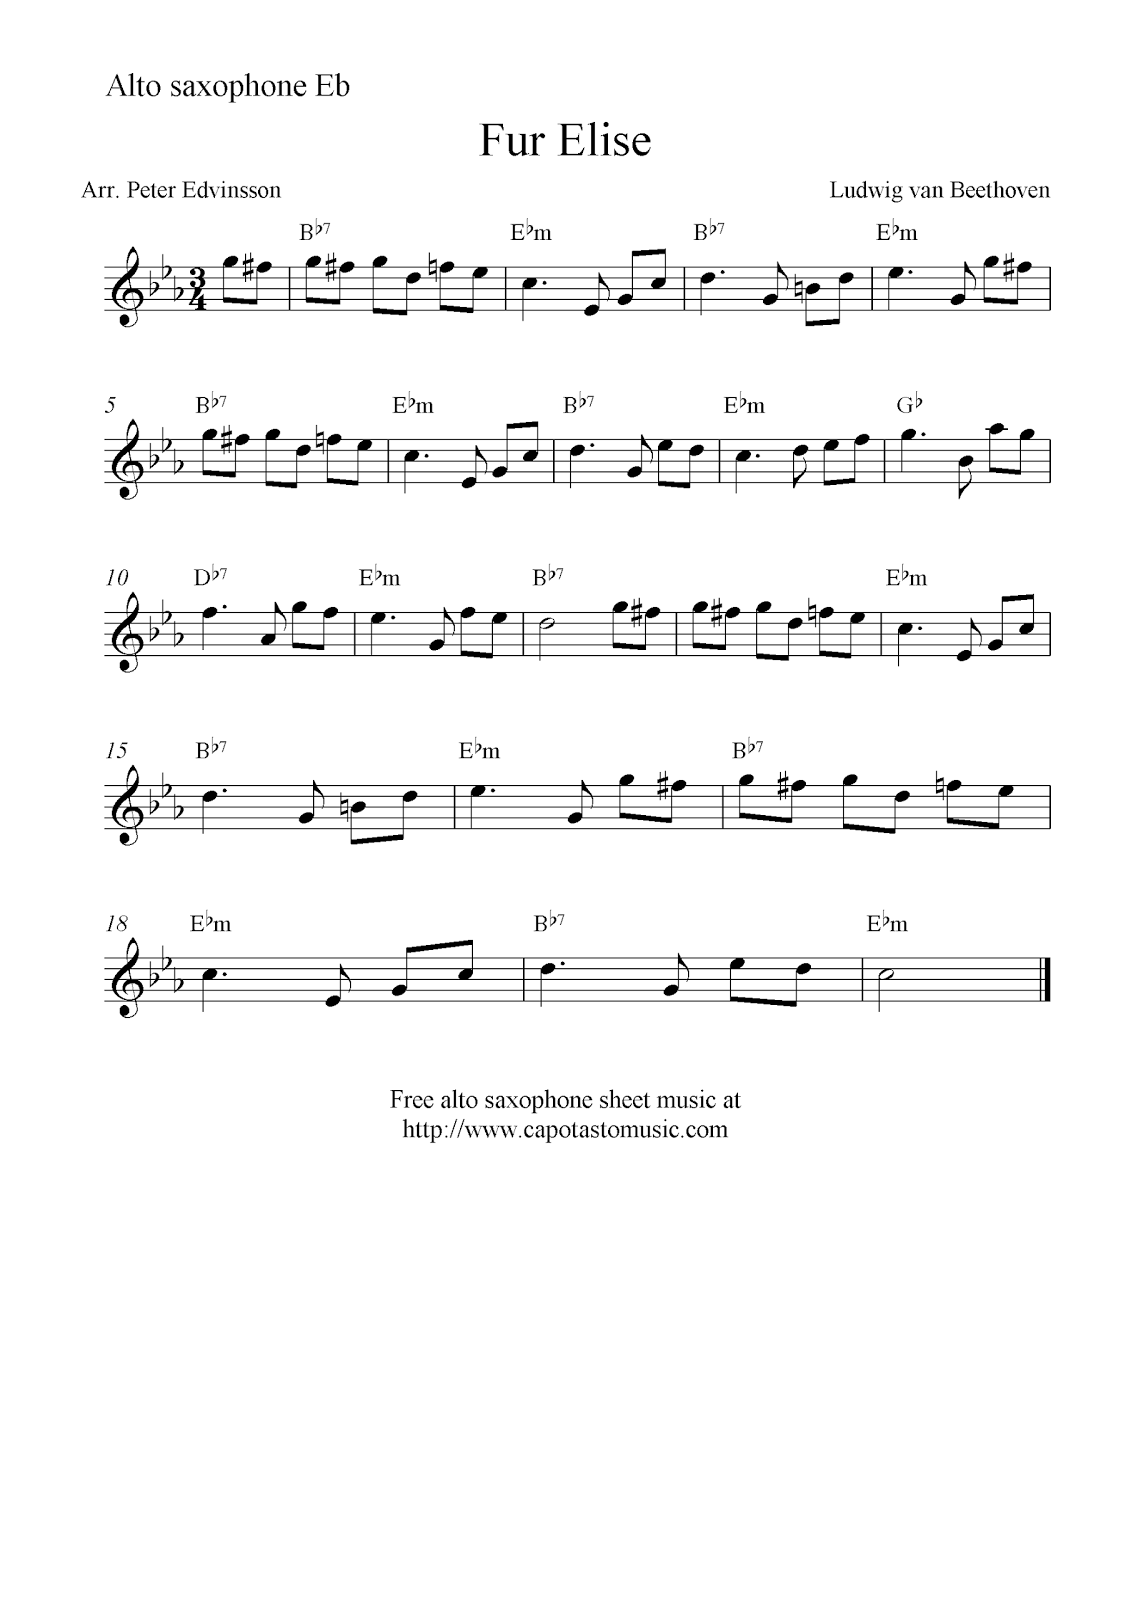 abc-sheet-music-for-alto-saxophone-solo-pdf-interactive